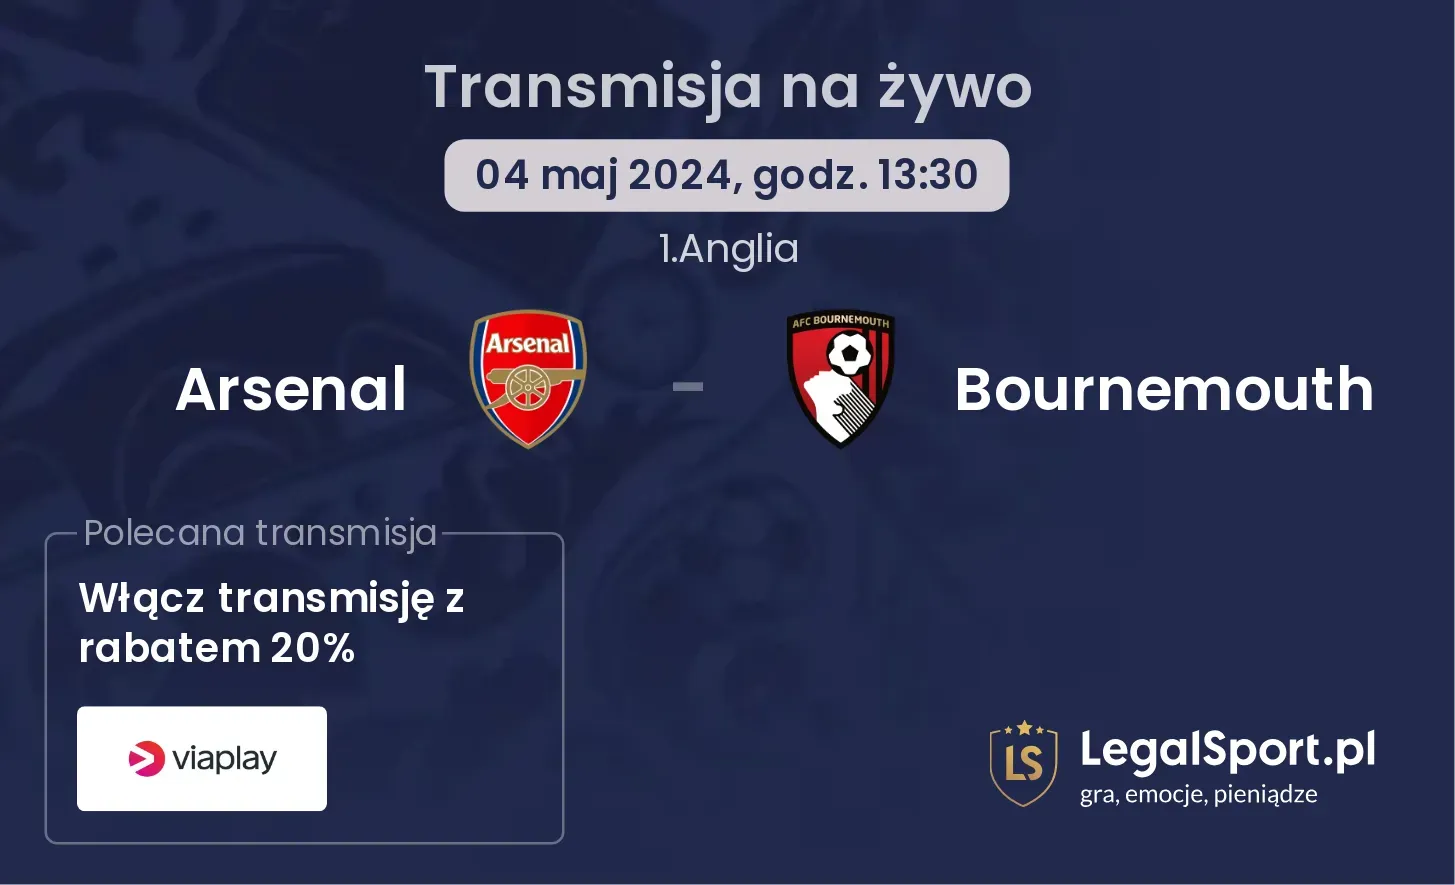 Arsenal - Bournemouth transmisja na żywo